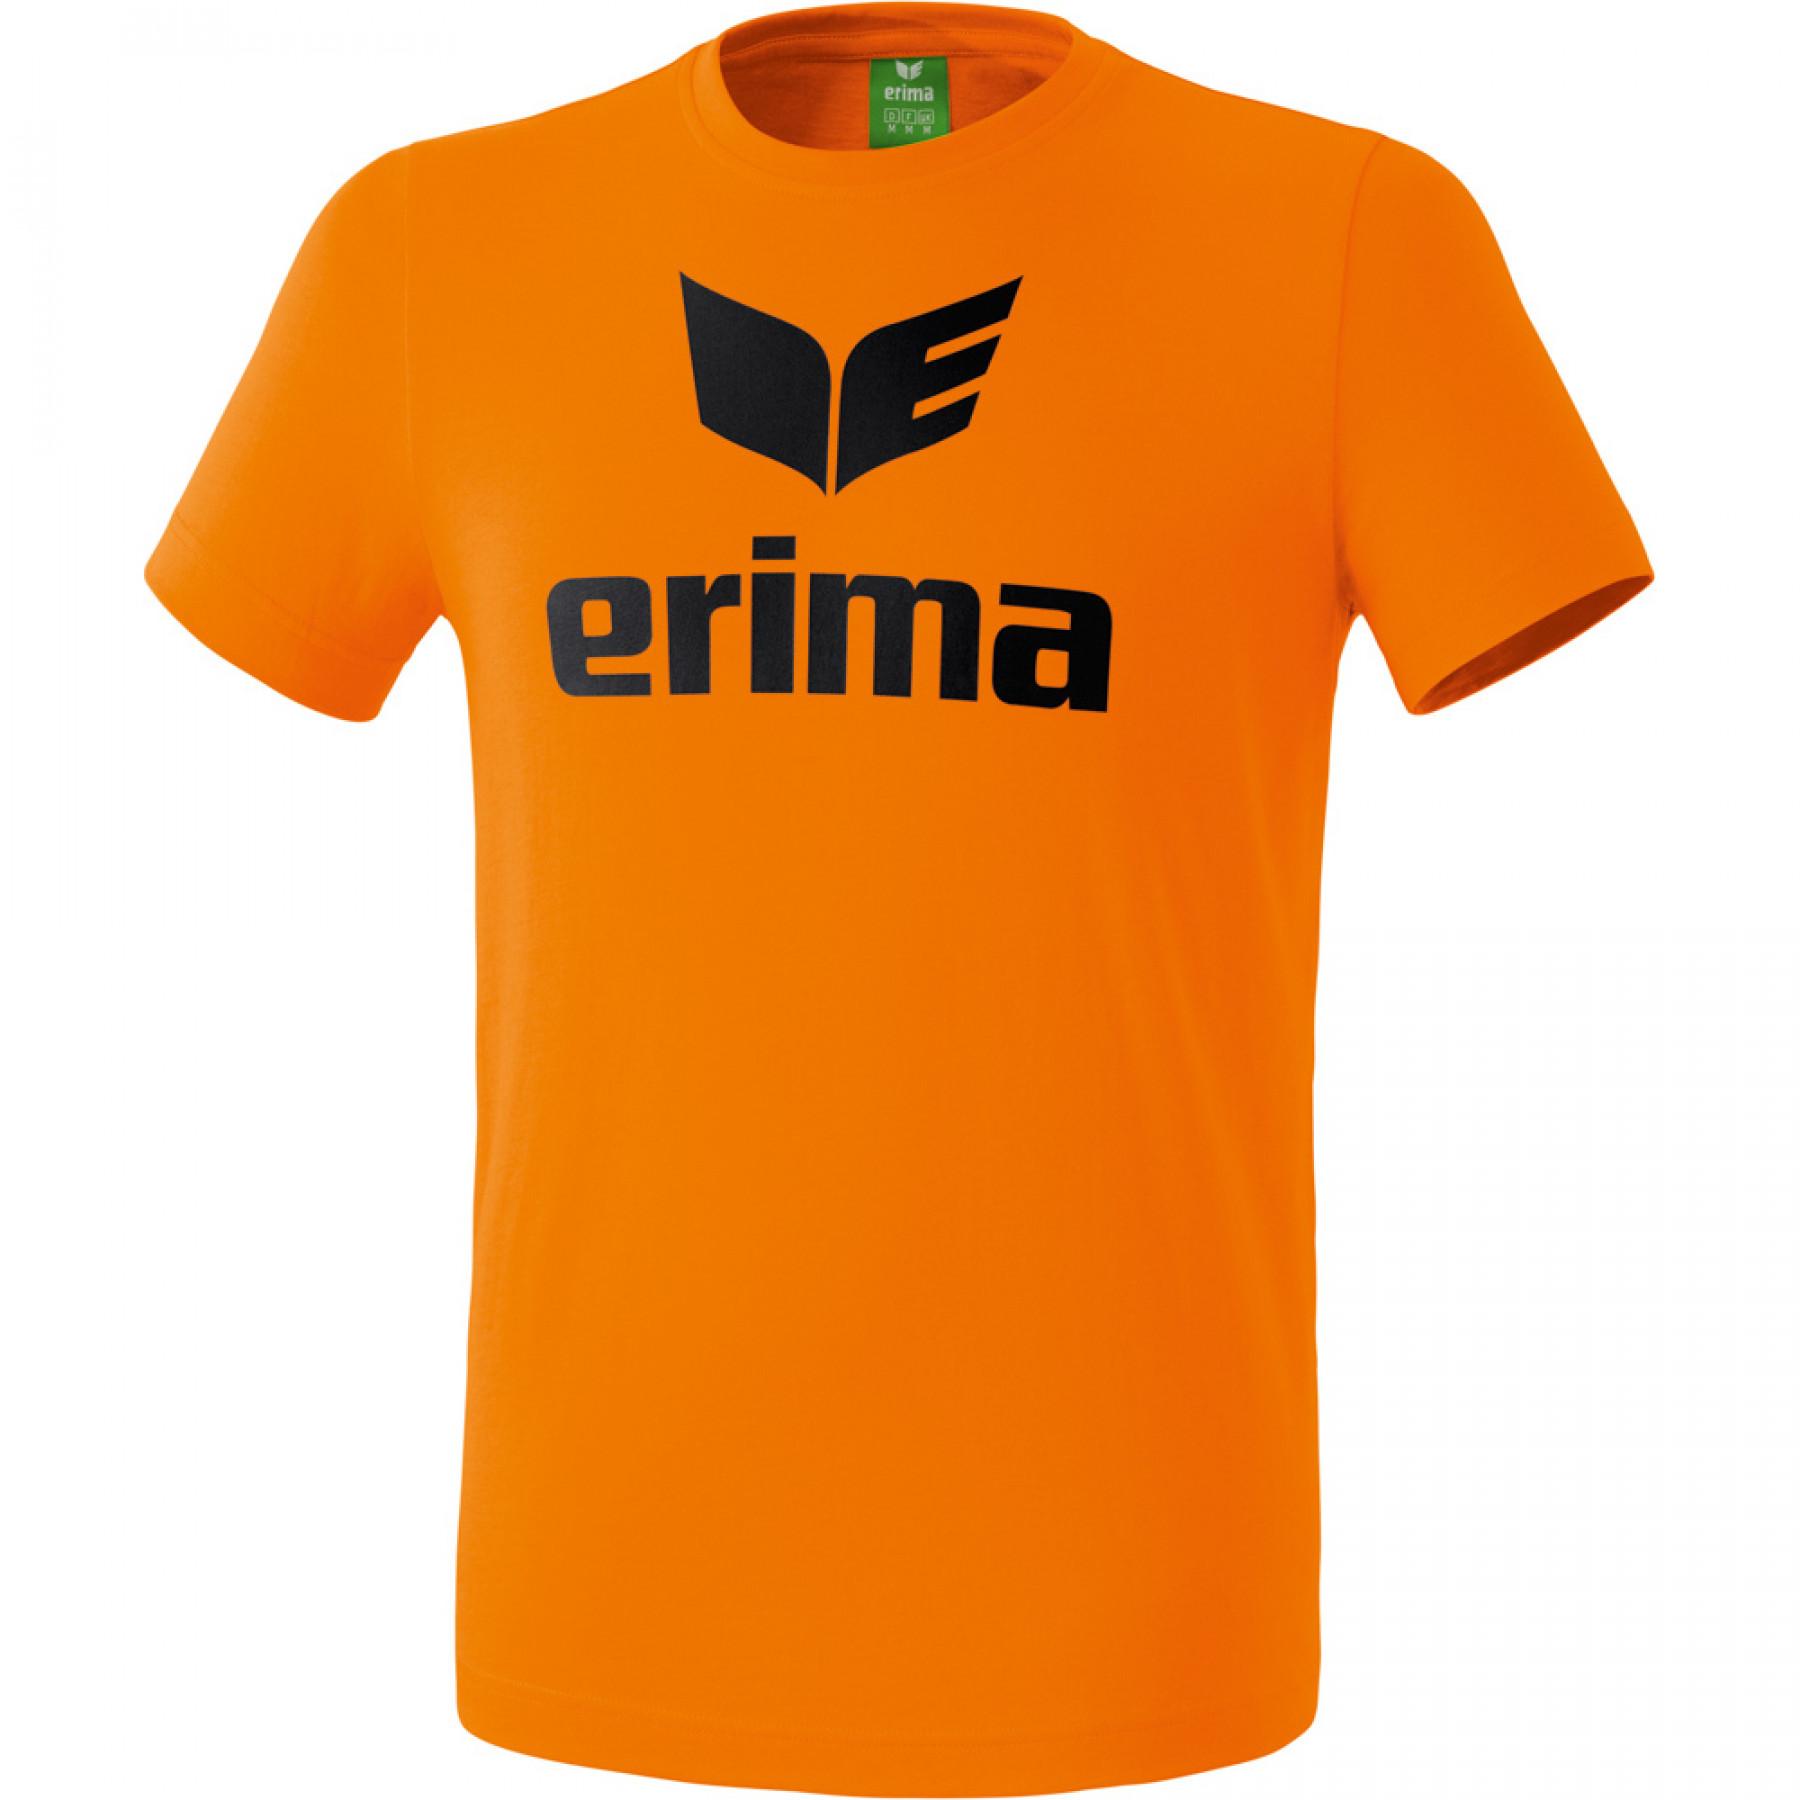 T-shirt Erima Promo